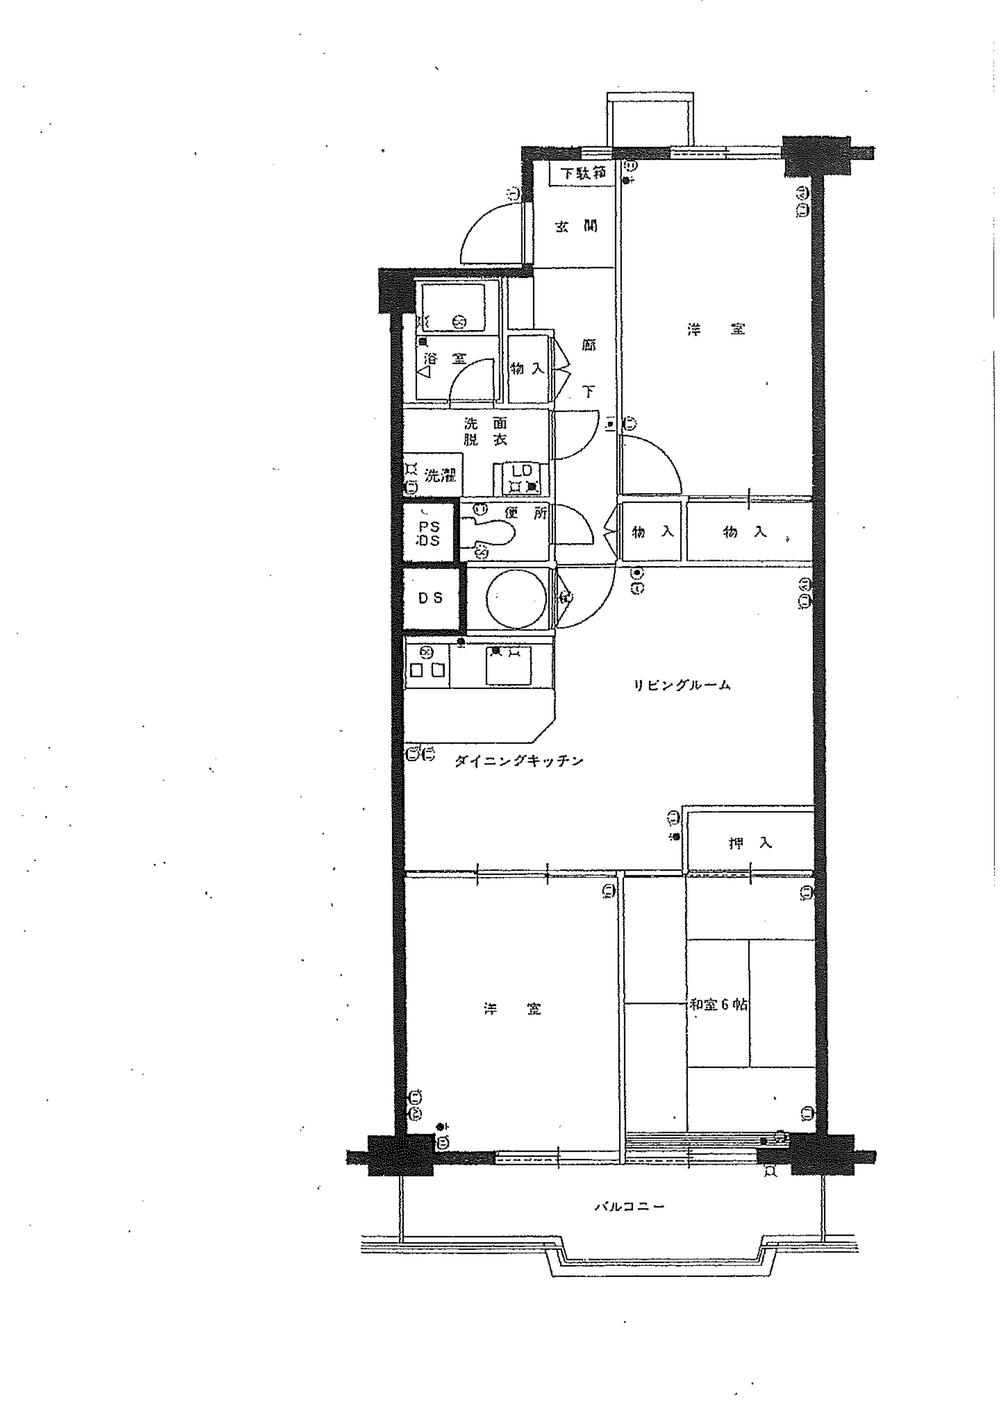 Floor plan. 3LDK, Price 11 million yen, Occupied area 73.16 sq m , Balcony area 7.7 sq m